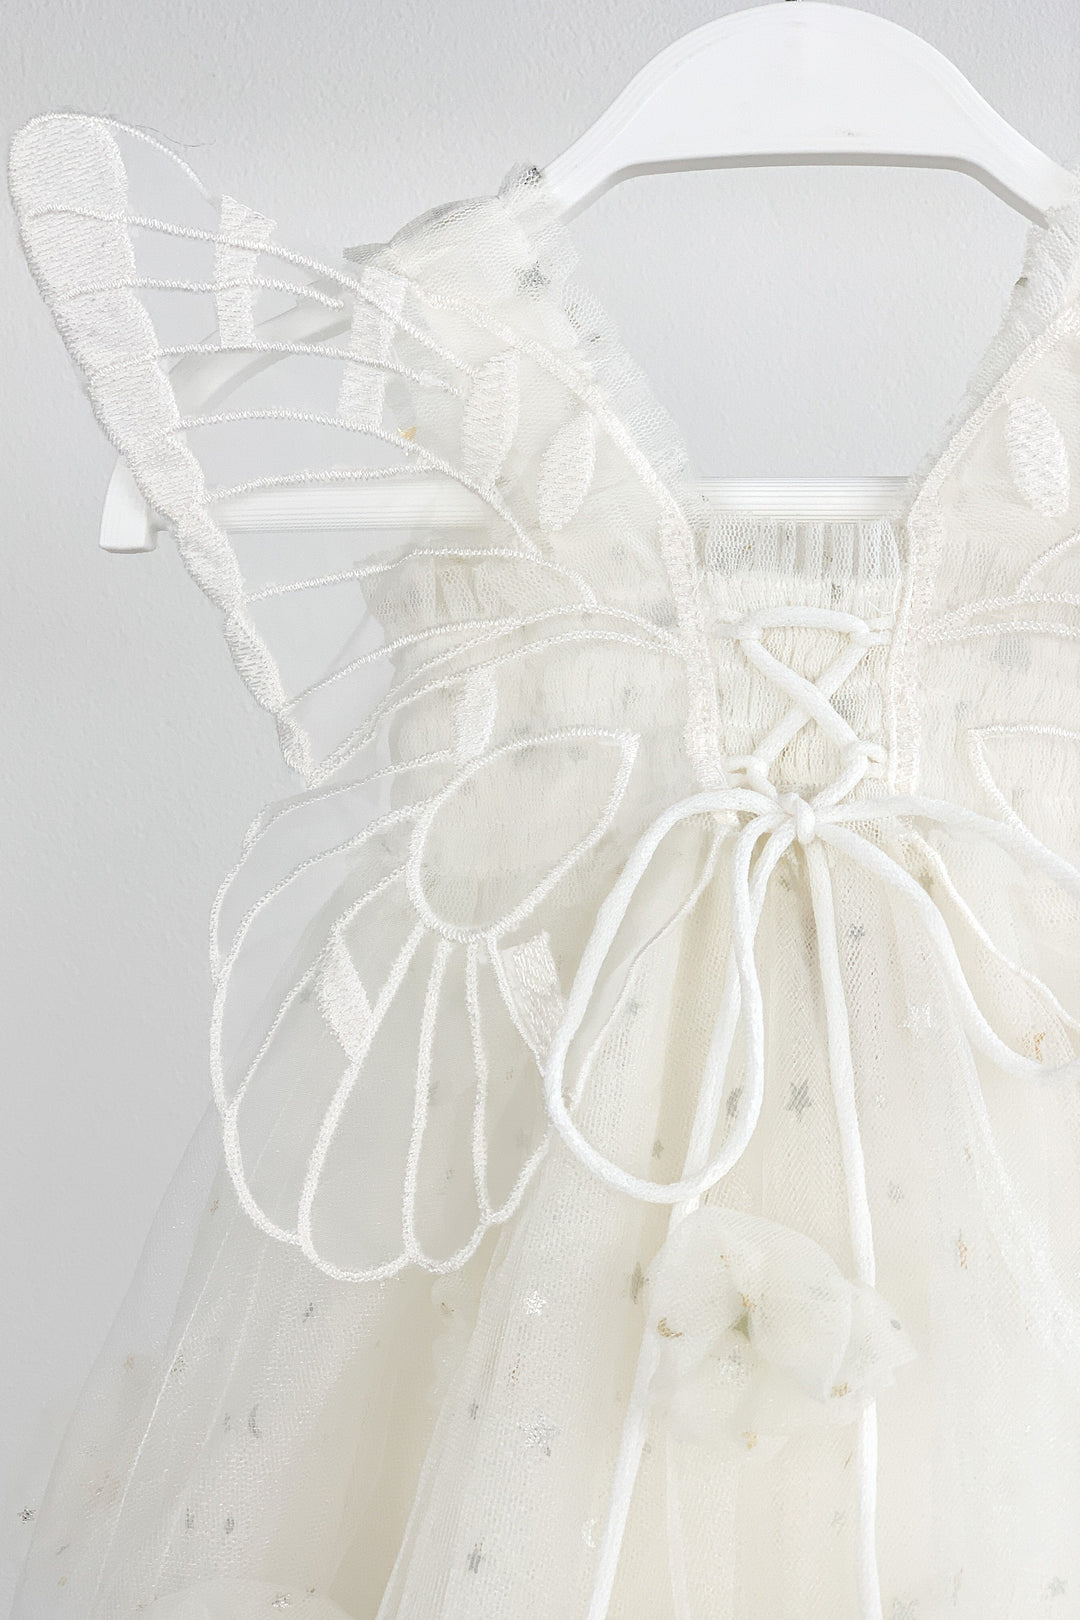 Luna Luna "Sabrina" White Celestial Fairy Wing Dress | Millie and John